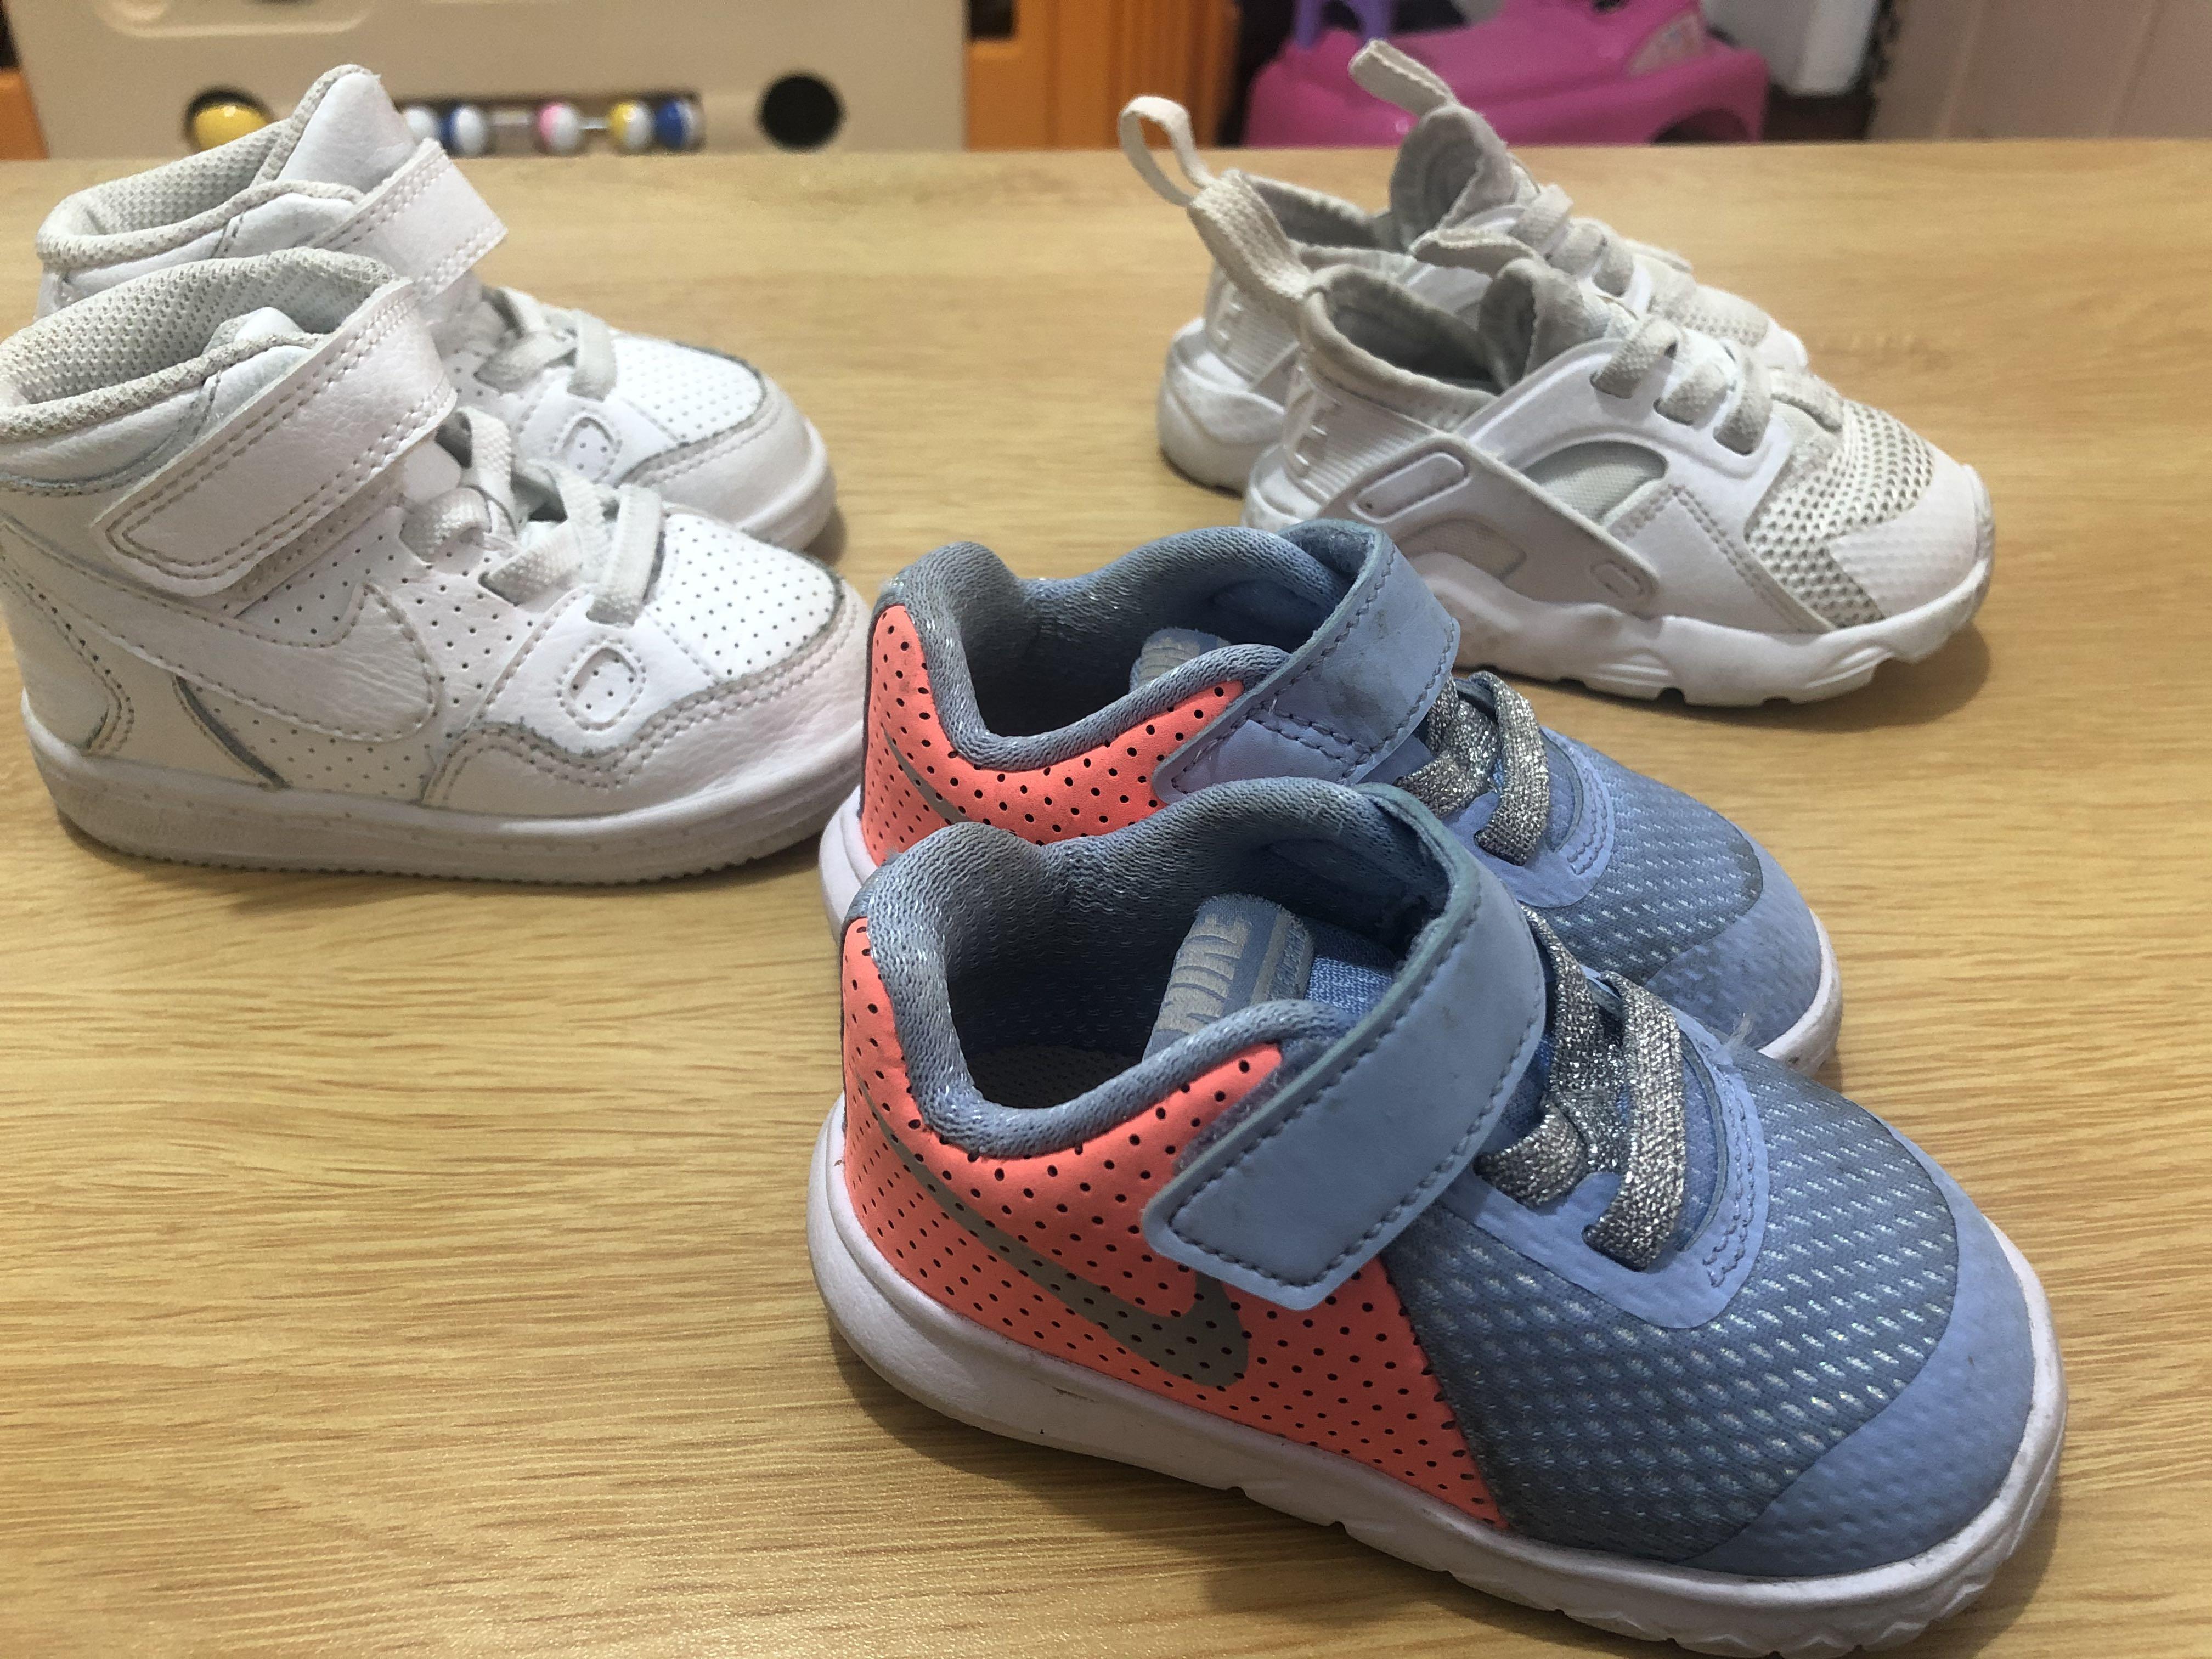 Nike Baby shoes size 4c, Babies \u0026 Kids 